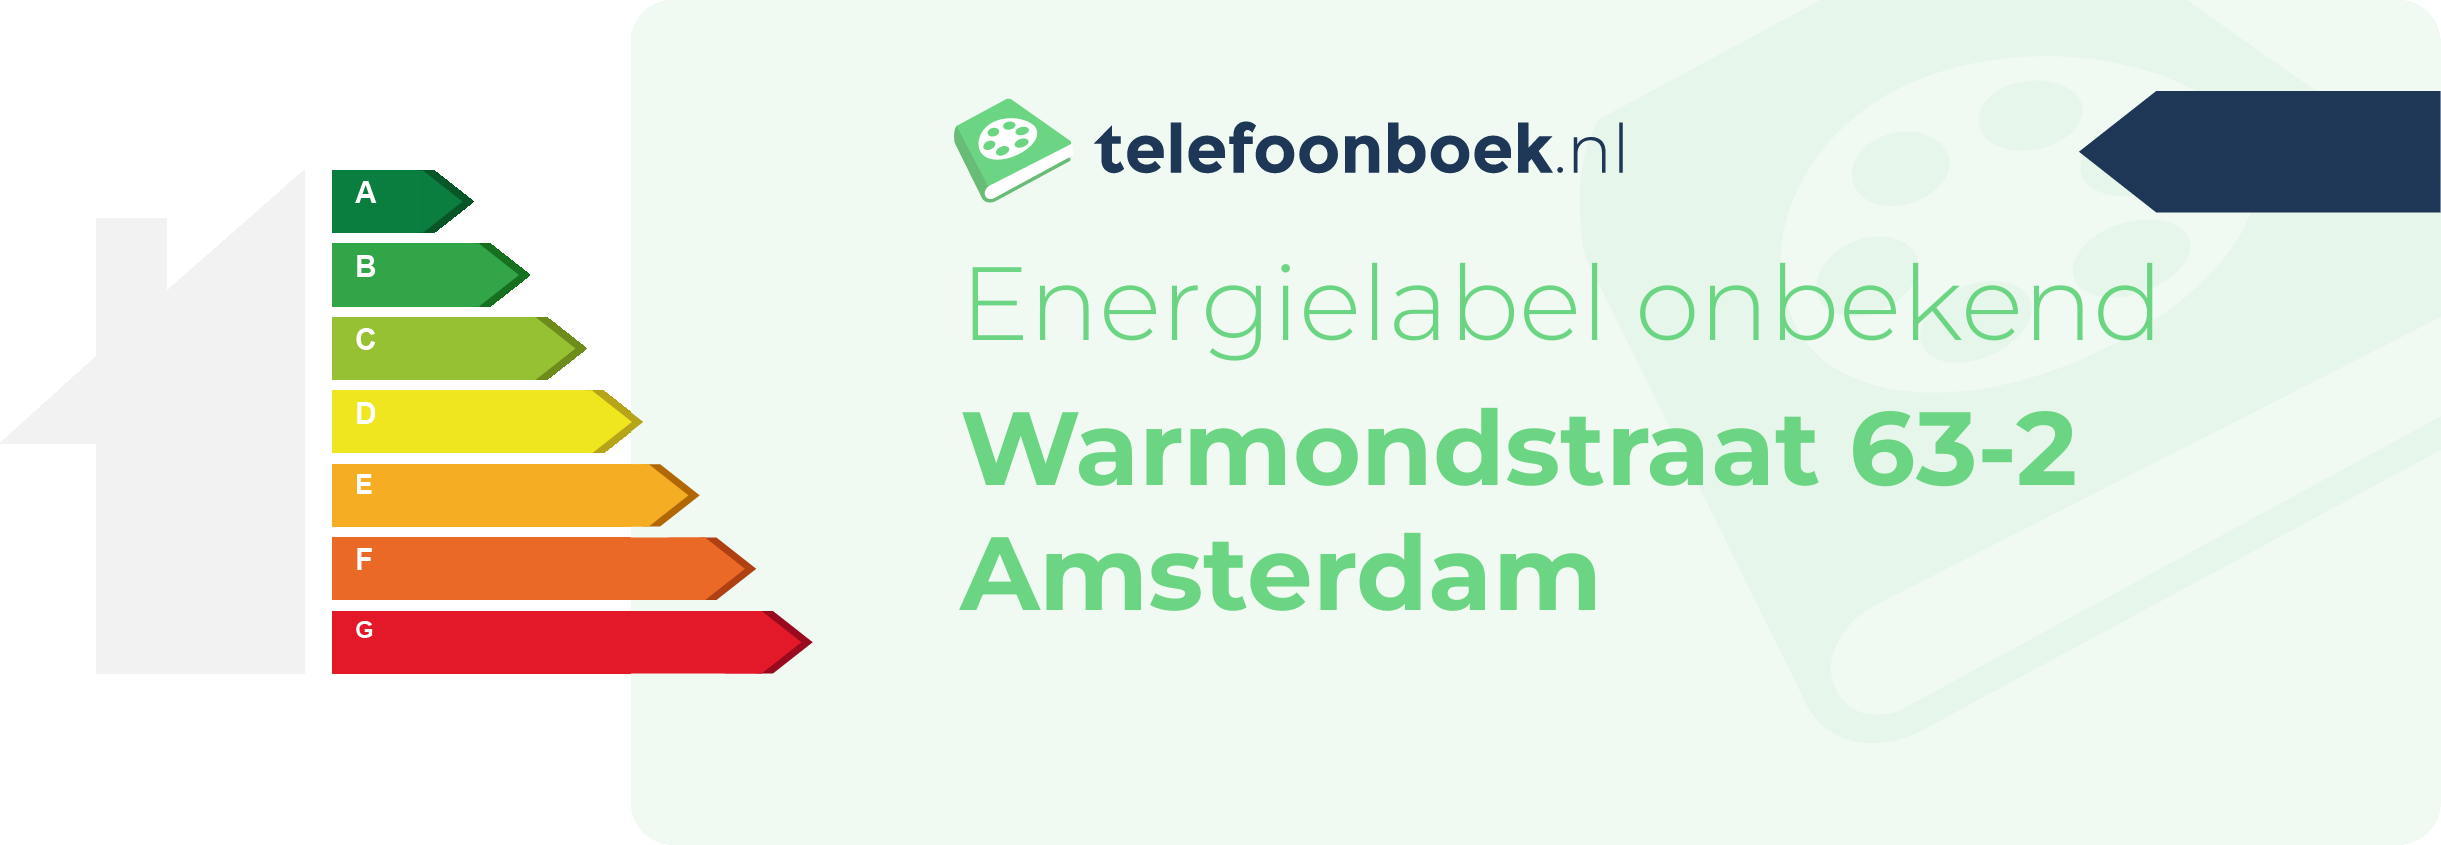 Energielabel Warmondstraat 63-2 Amsterdam